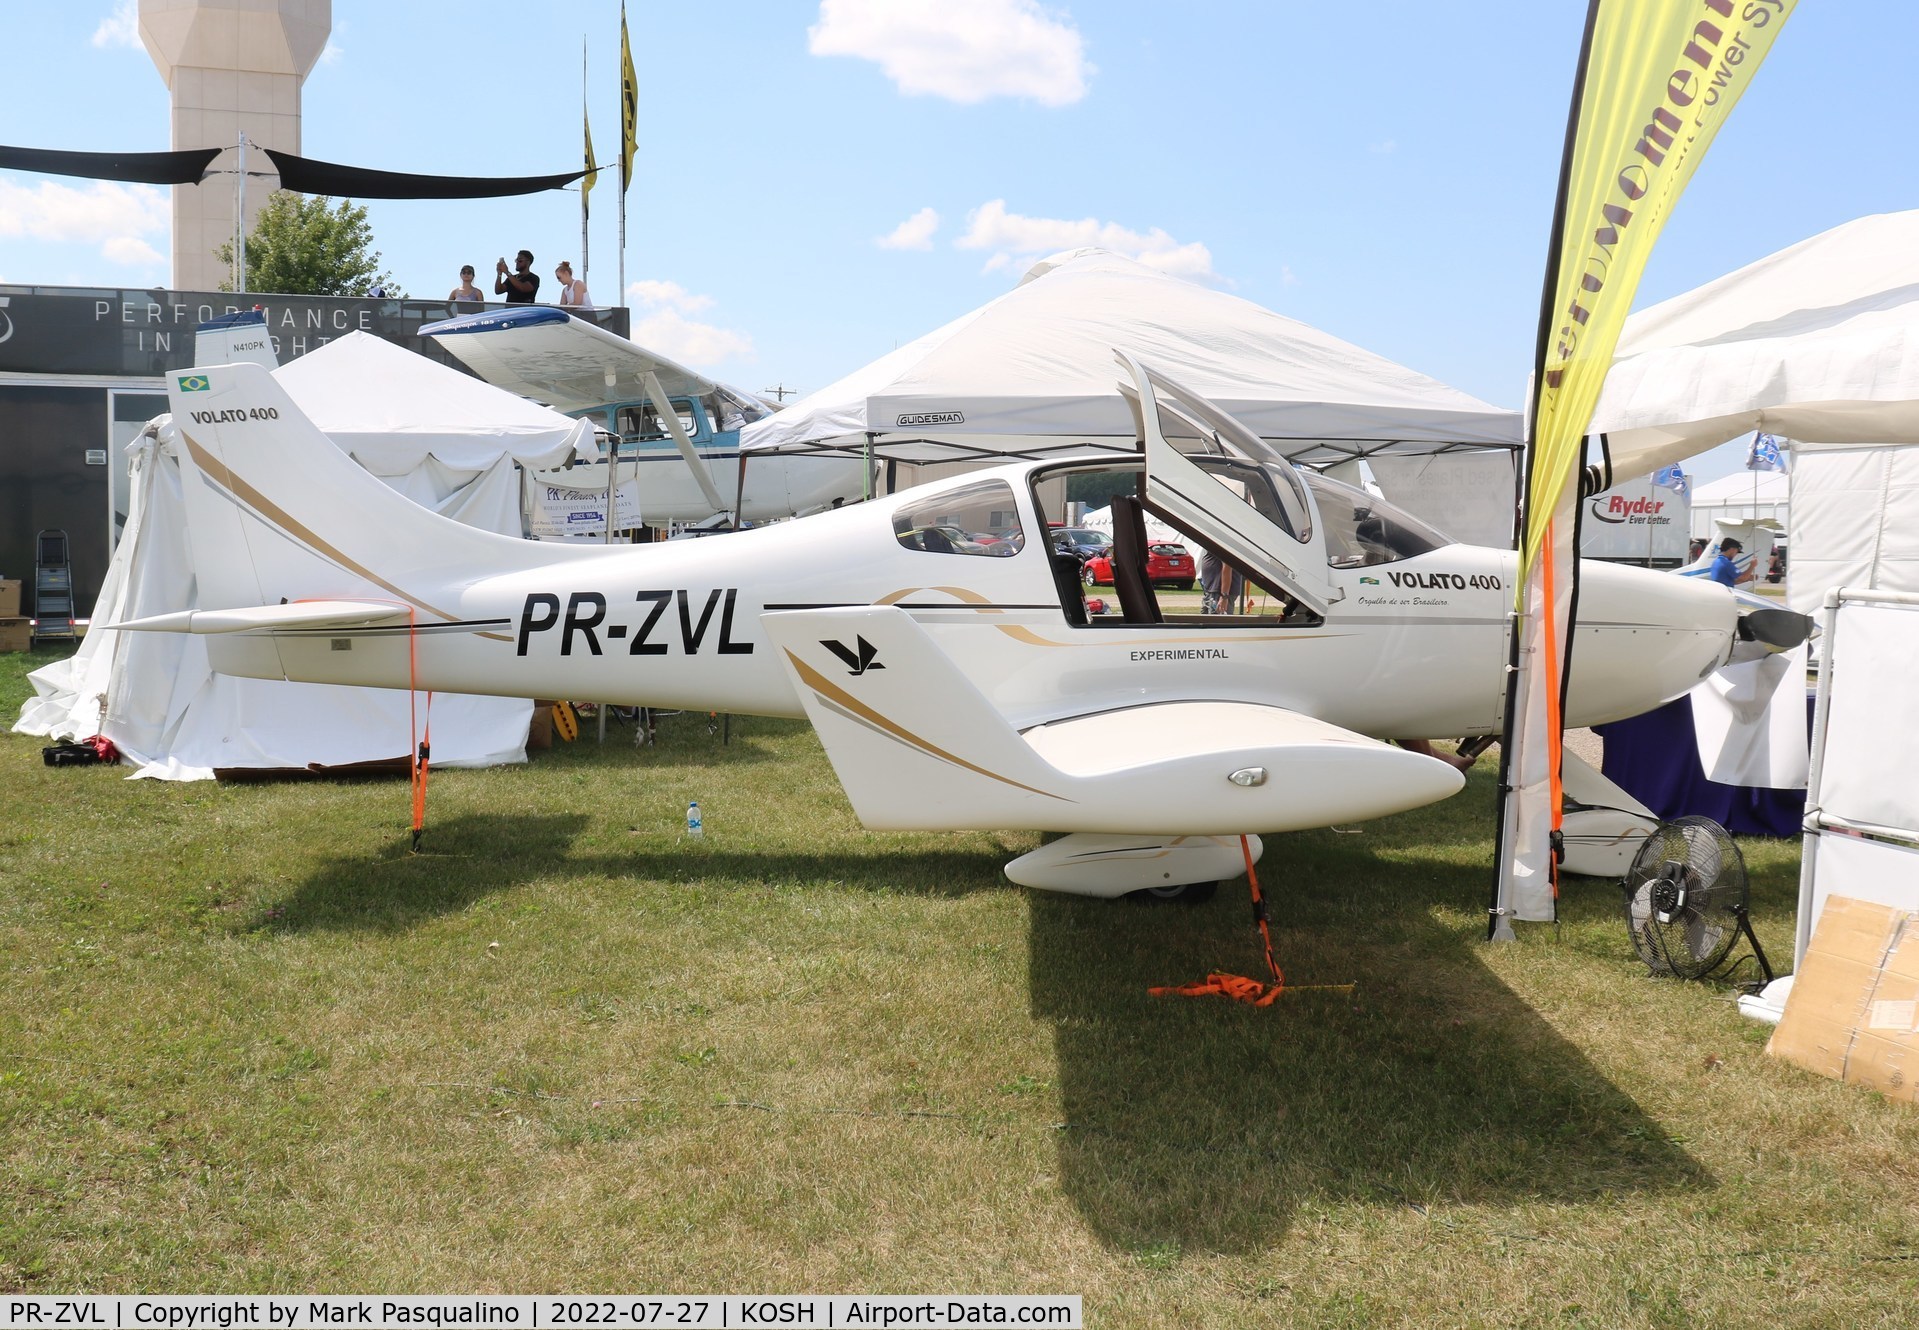 PR-ZVL, 2013 Volato 400 C/N 001, Volato 400